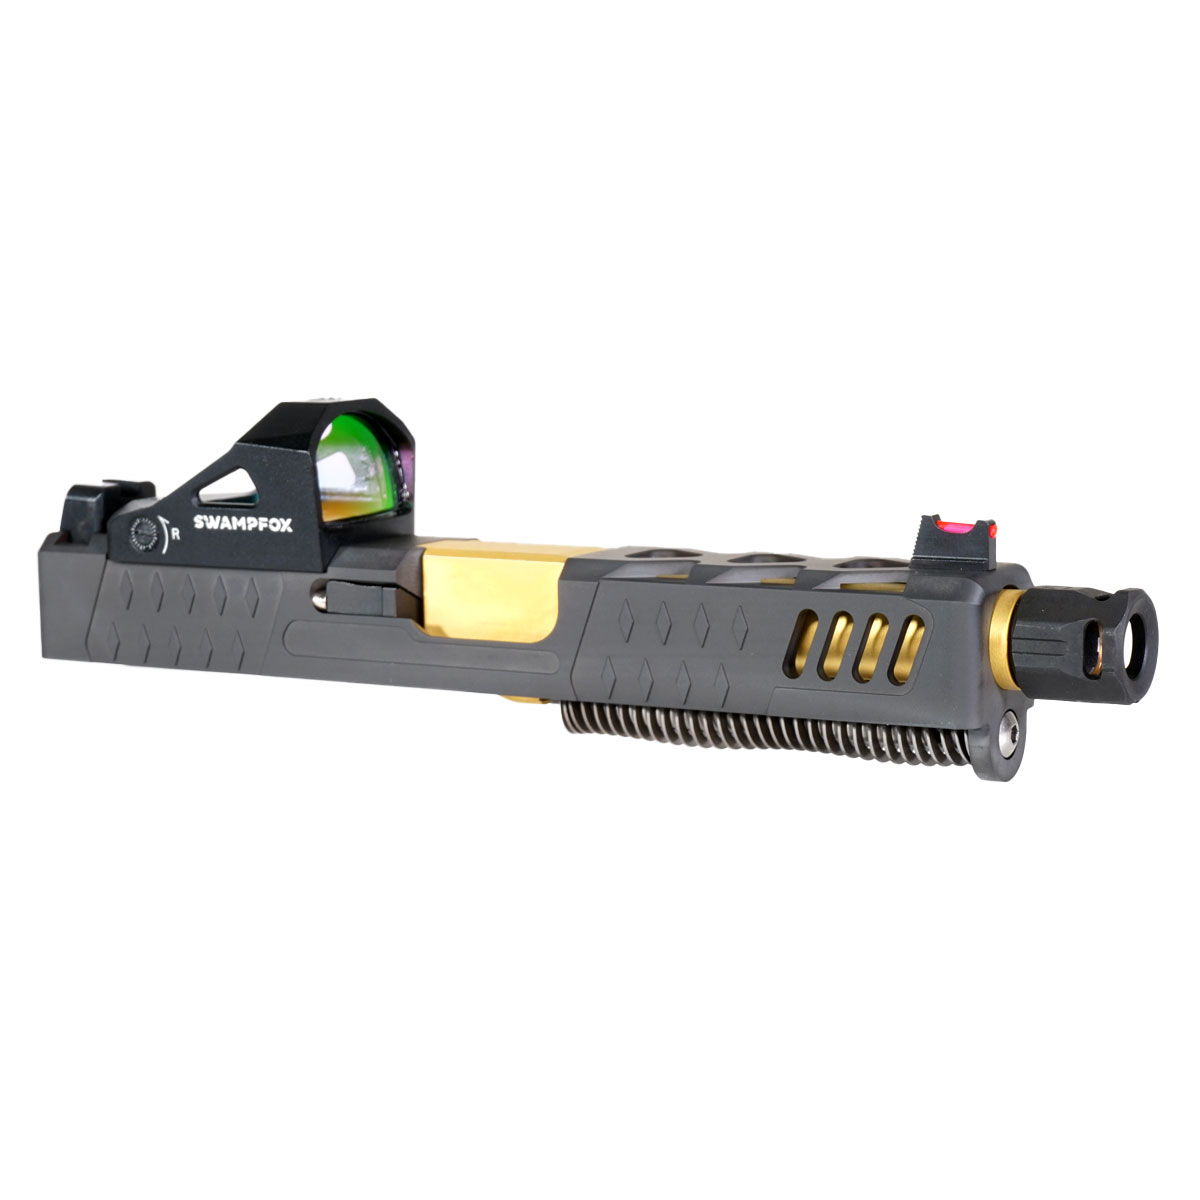 DTT 'Parc Ferme' 9mm Complete Slide Kit - Glock 19 Gen 1-3 Compatible